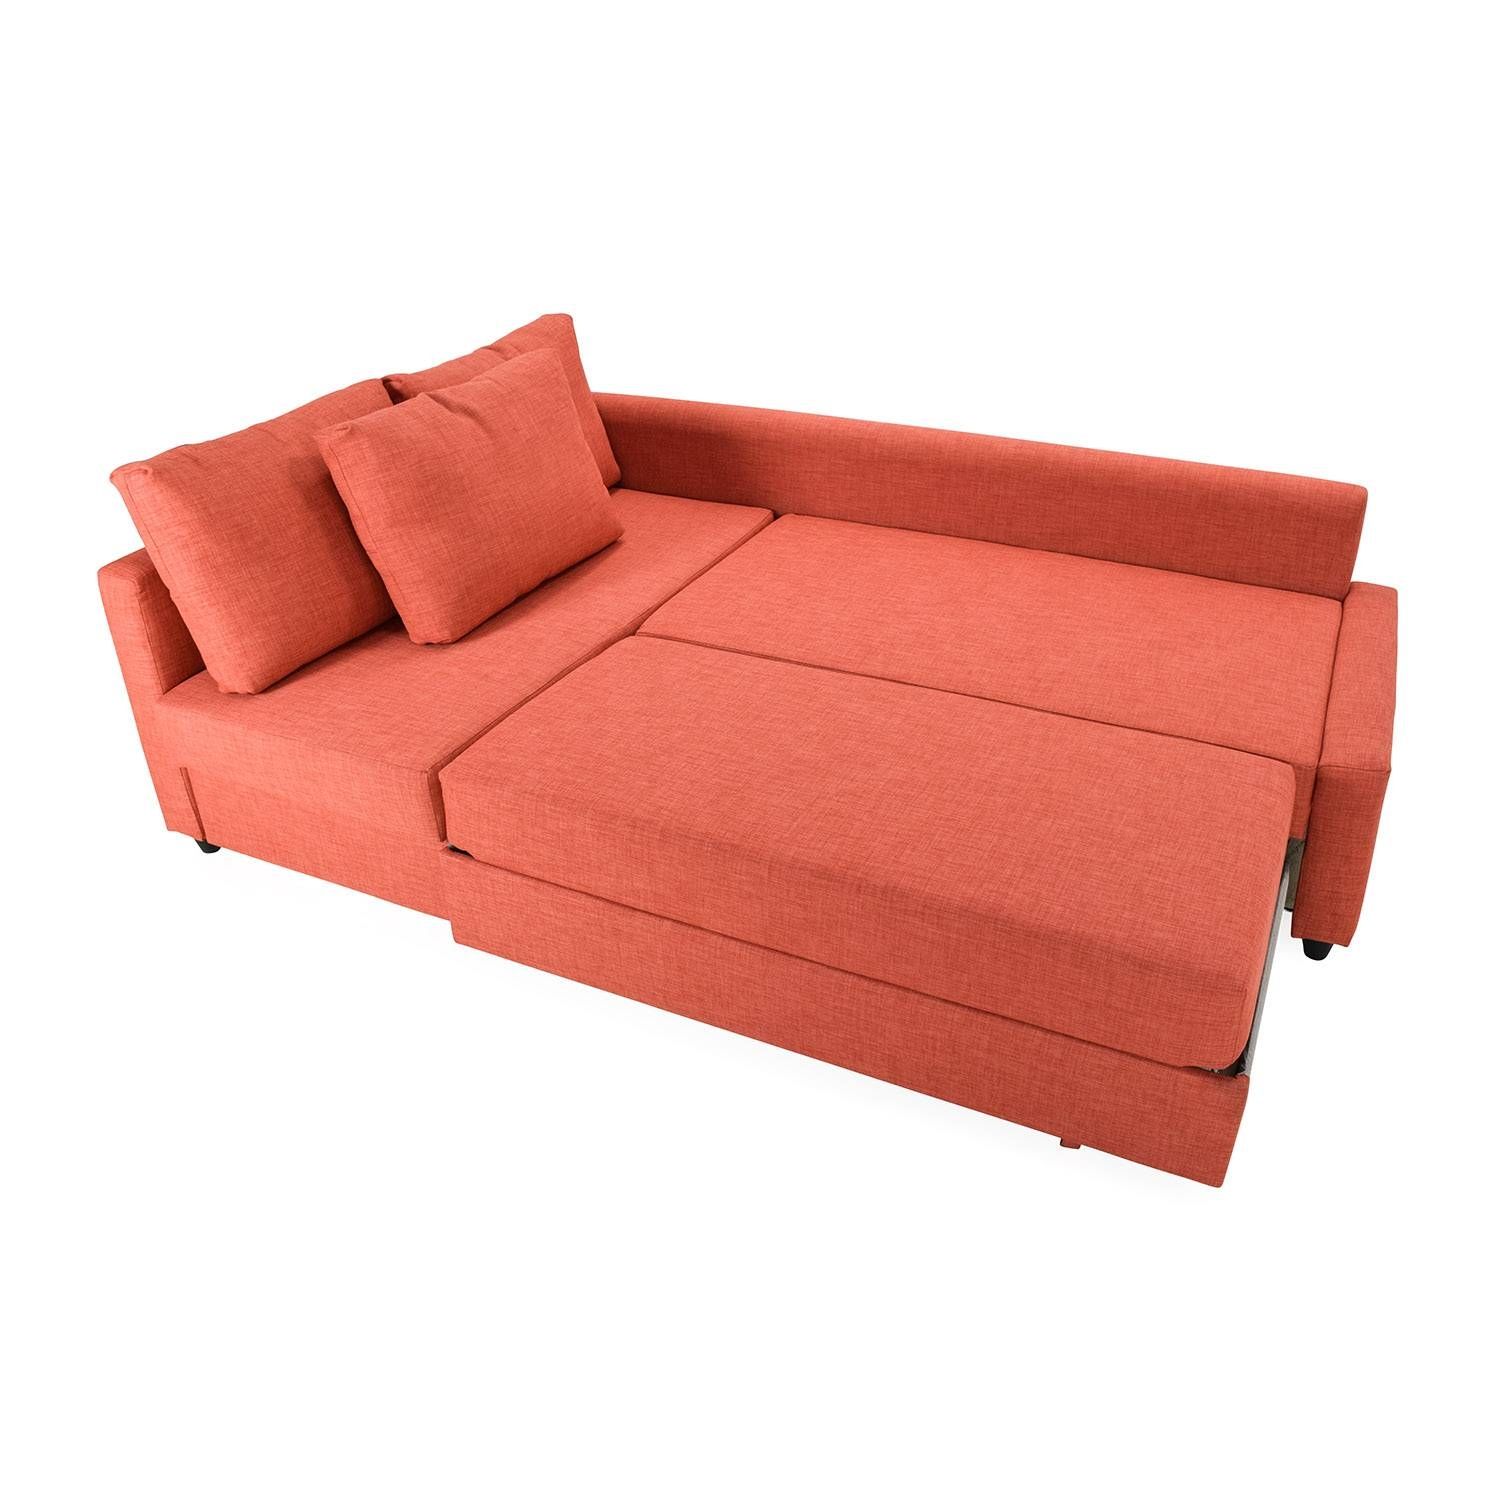 49% Off – Ikea Friheten Sofa Bed With Chaise / Sofas Throughout Orange Ikea Sofas (View 23 of 30)